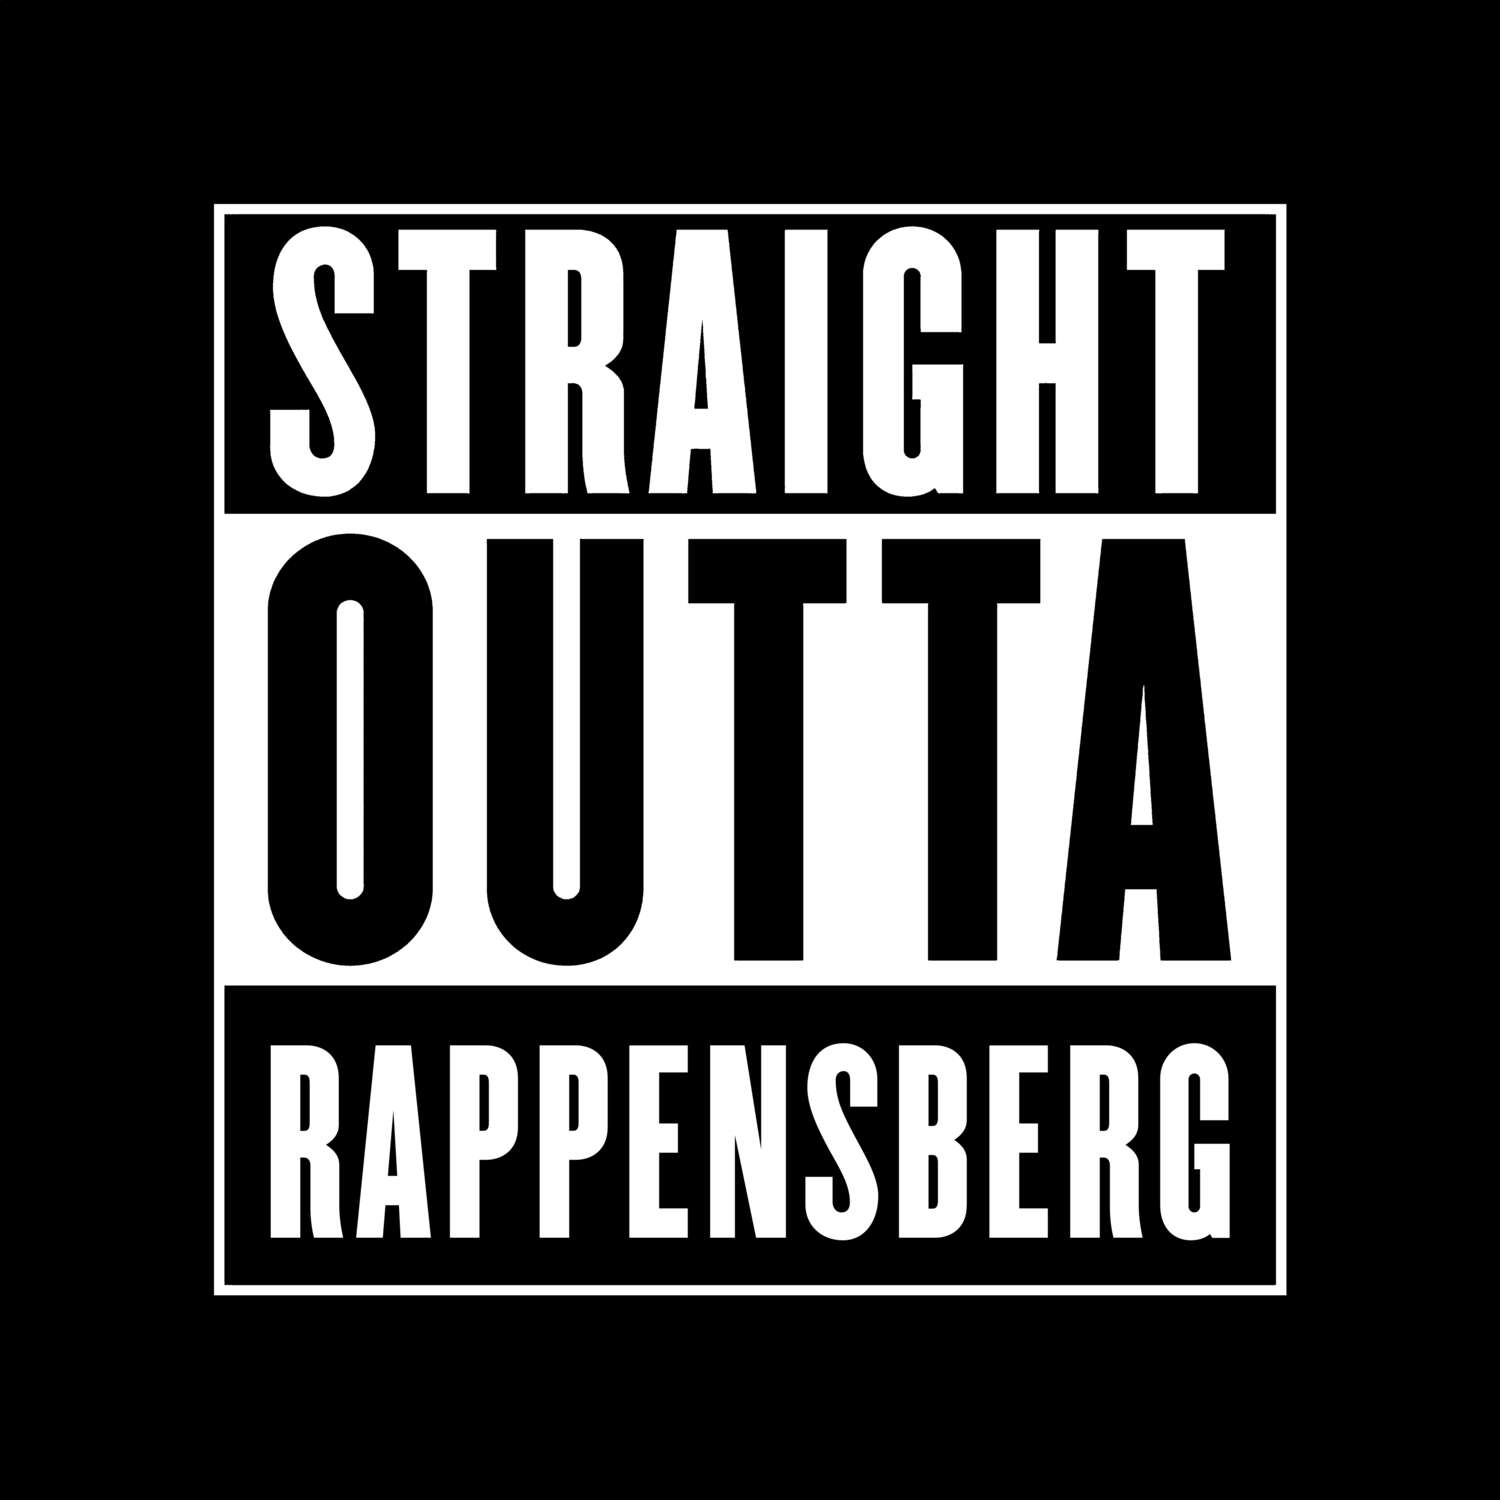 Rappensberg T-Shirt »Straight Outta«